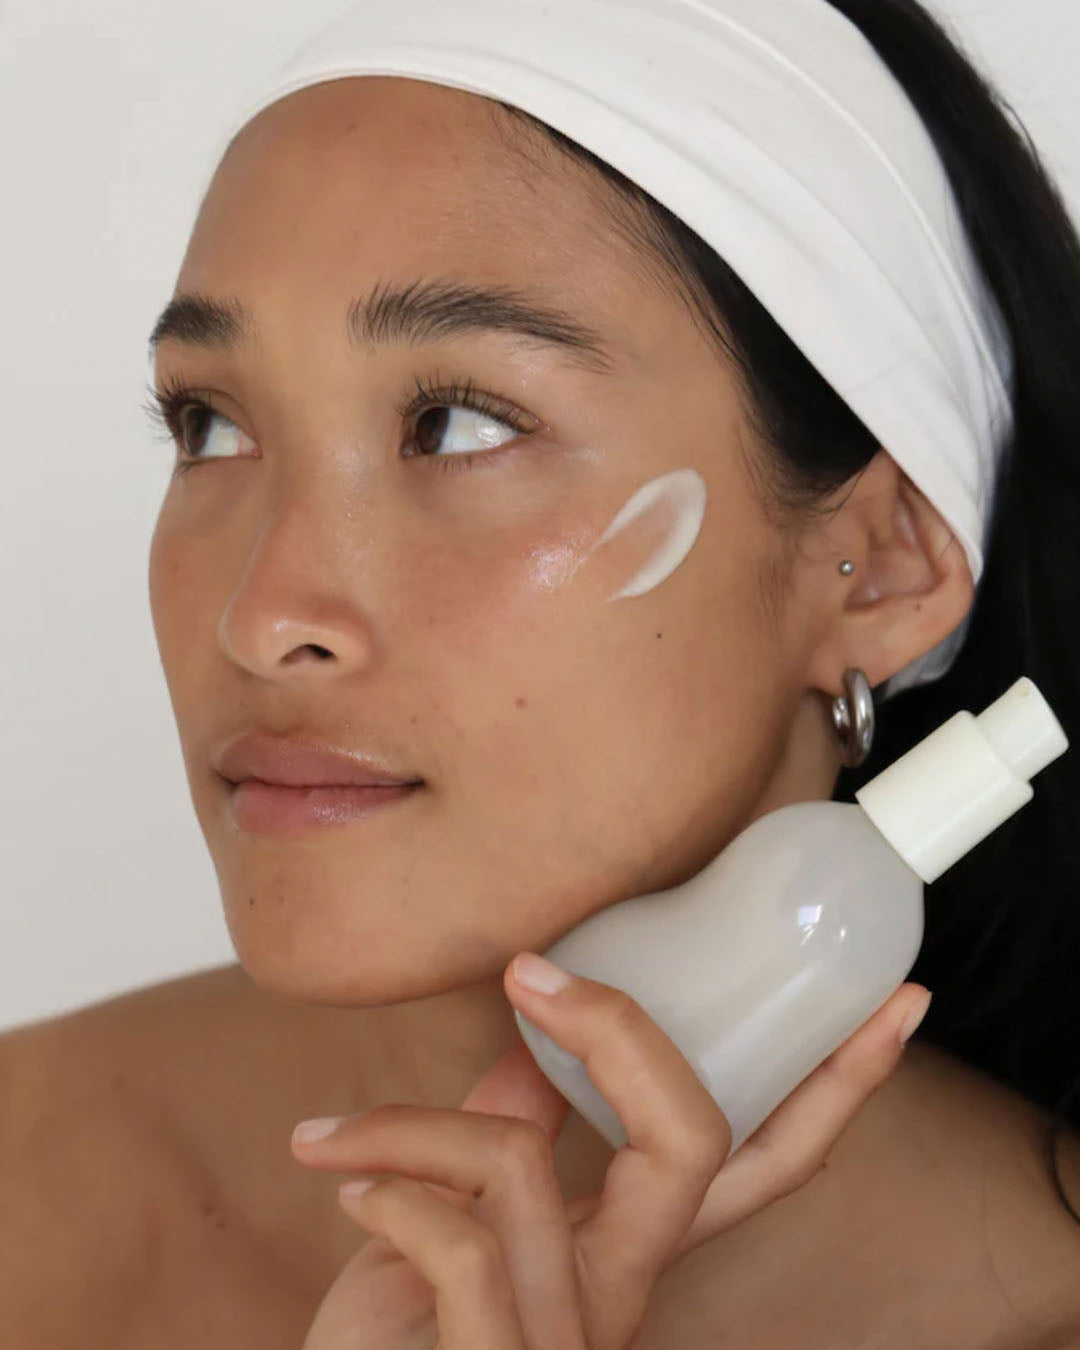 Milky Emulsion Cleanser Skincare by Foile - Prae Store